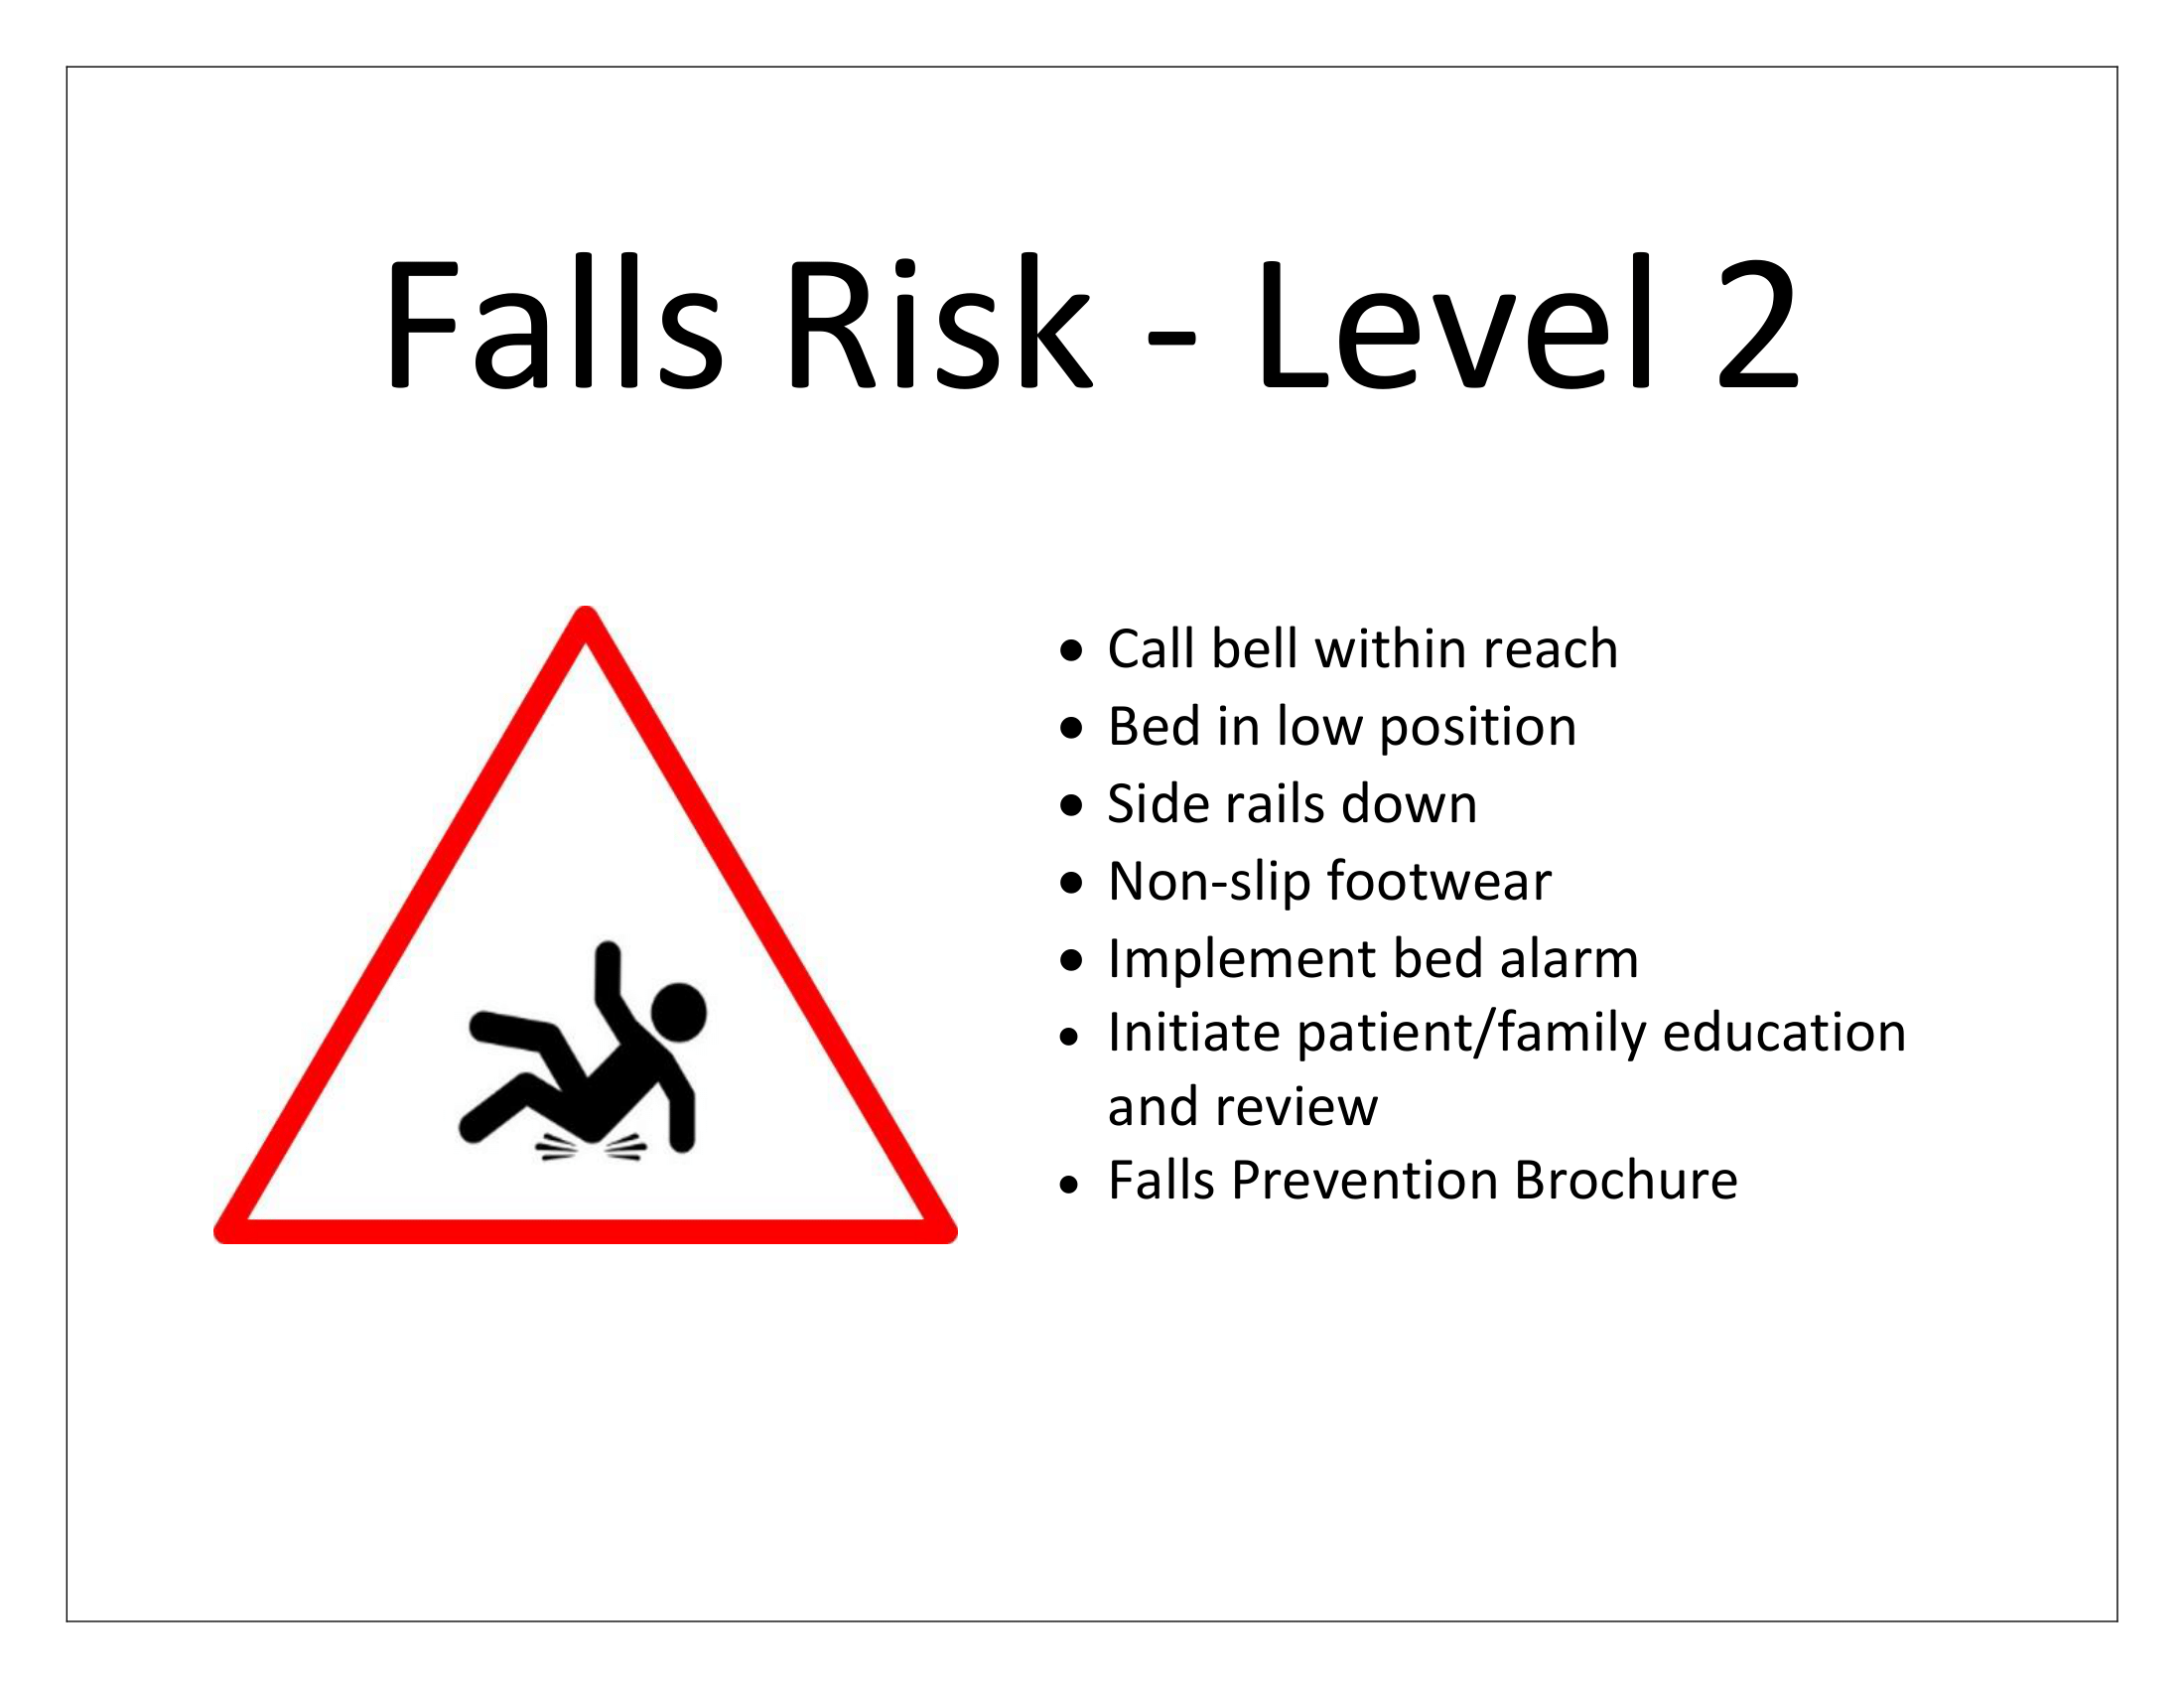 Falls Risk Level 2